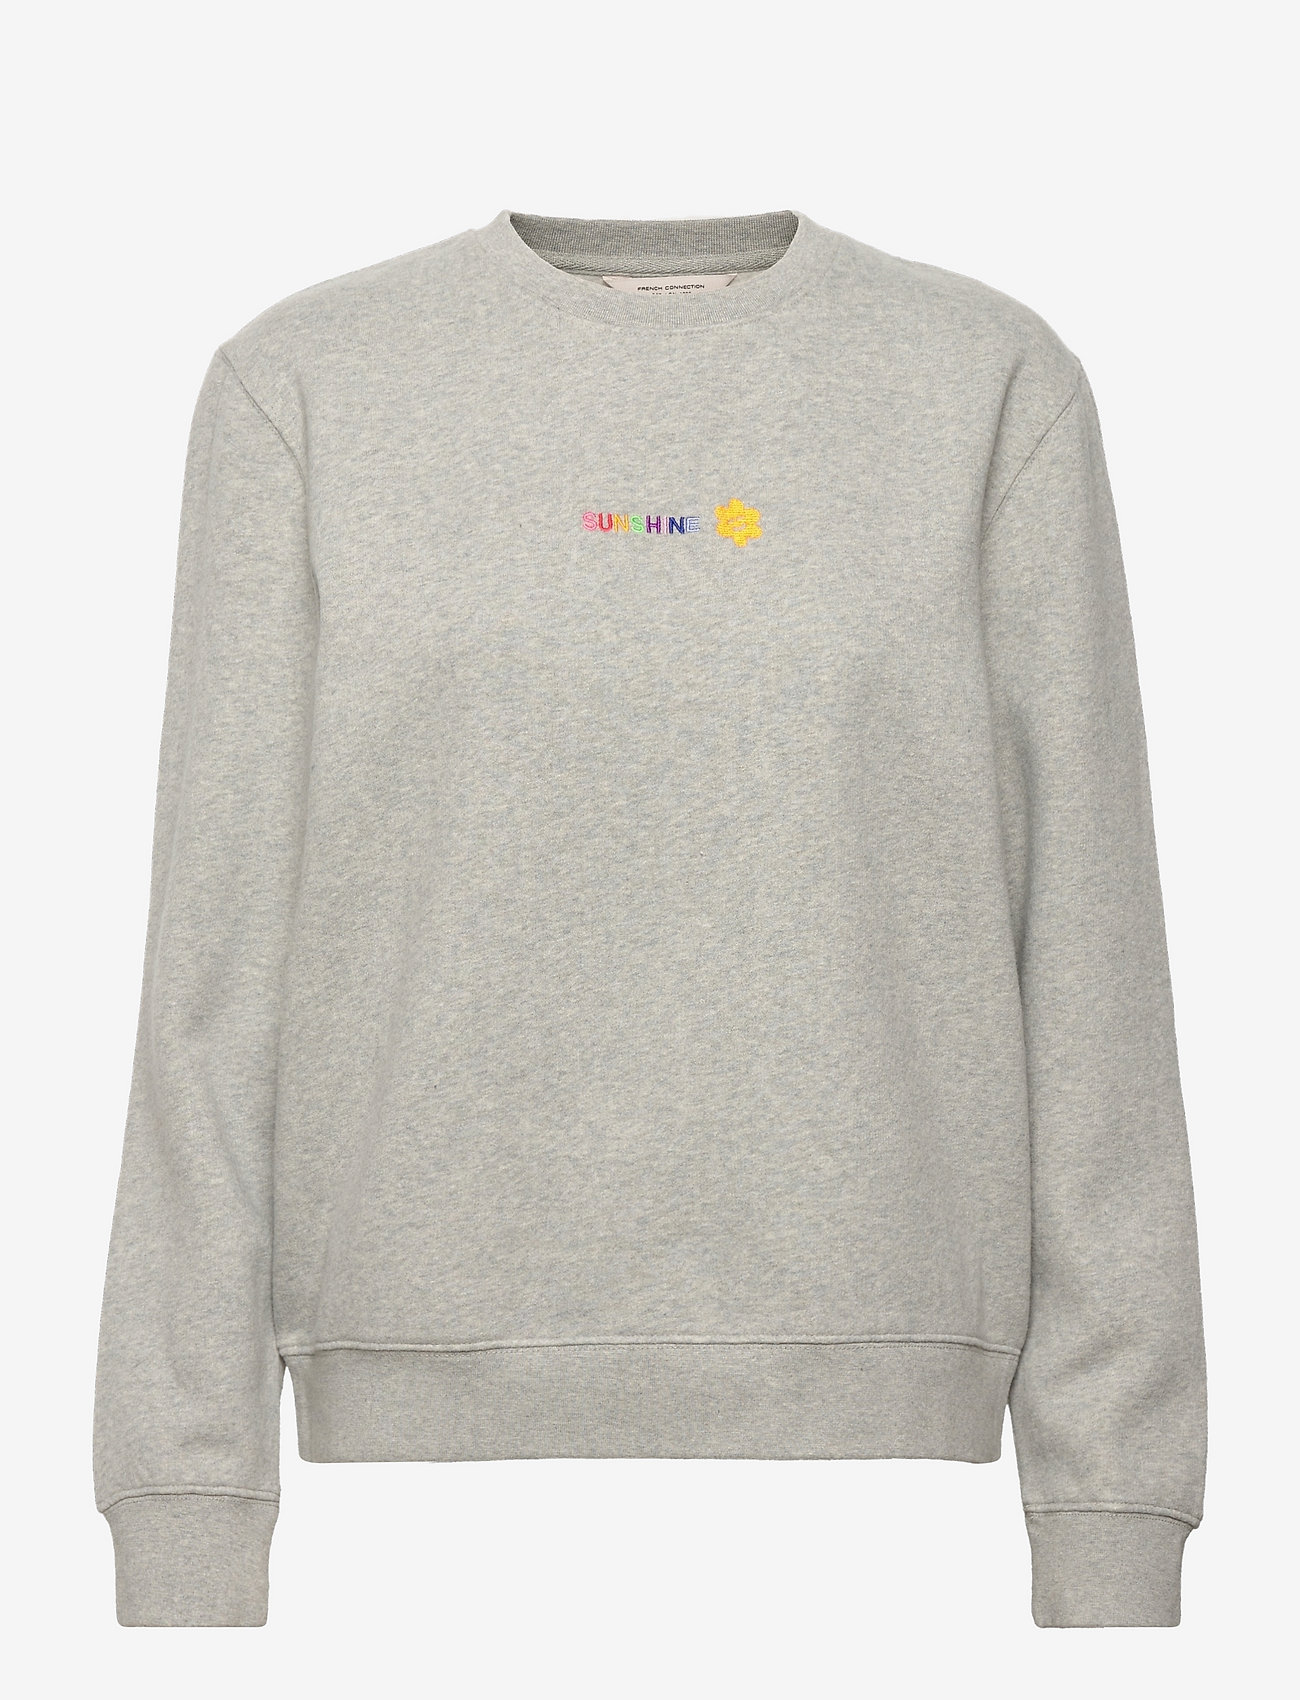 French Connection - SUNSHINE ORGNC GRAPHIC SWEATER - sweatshirts - light grey mel - 1